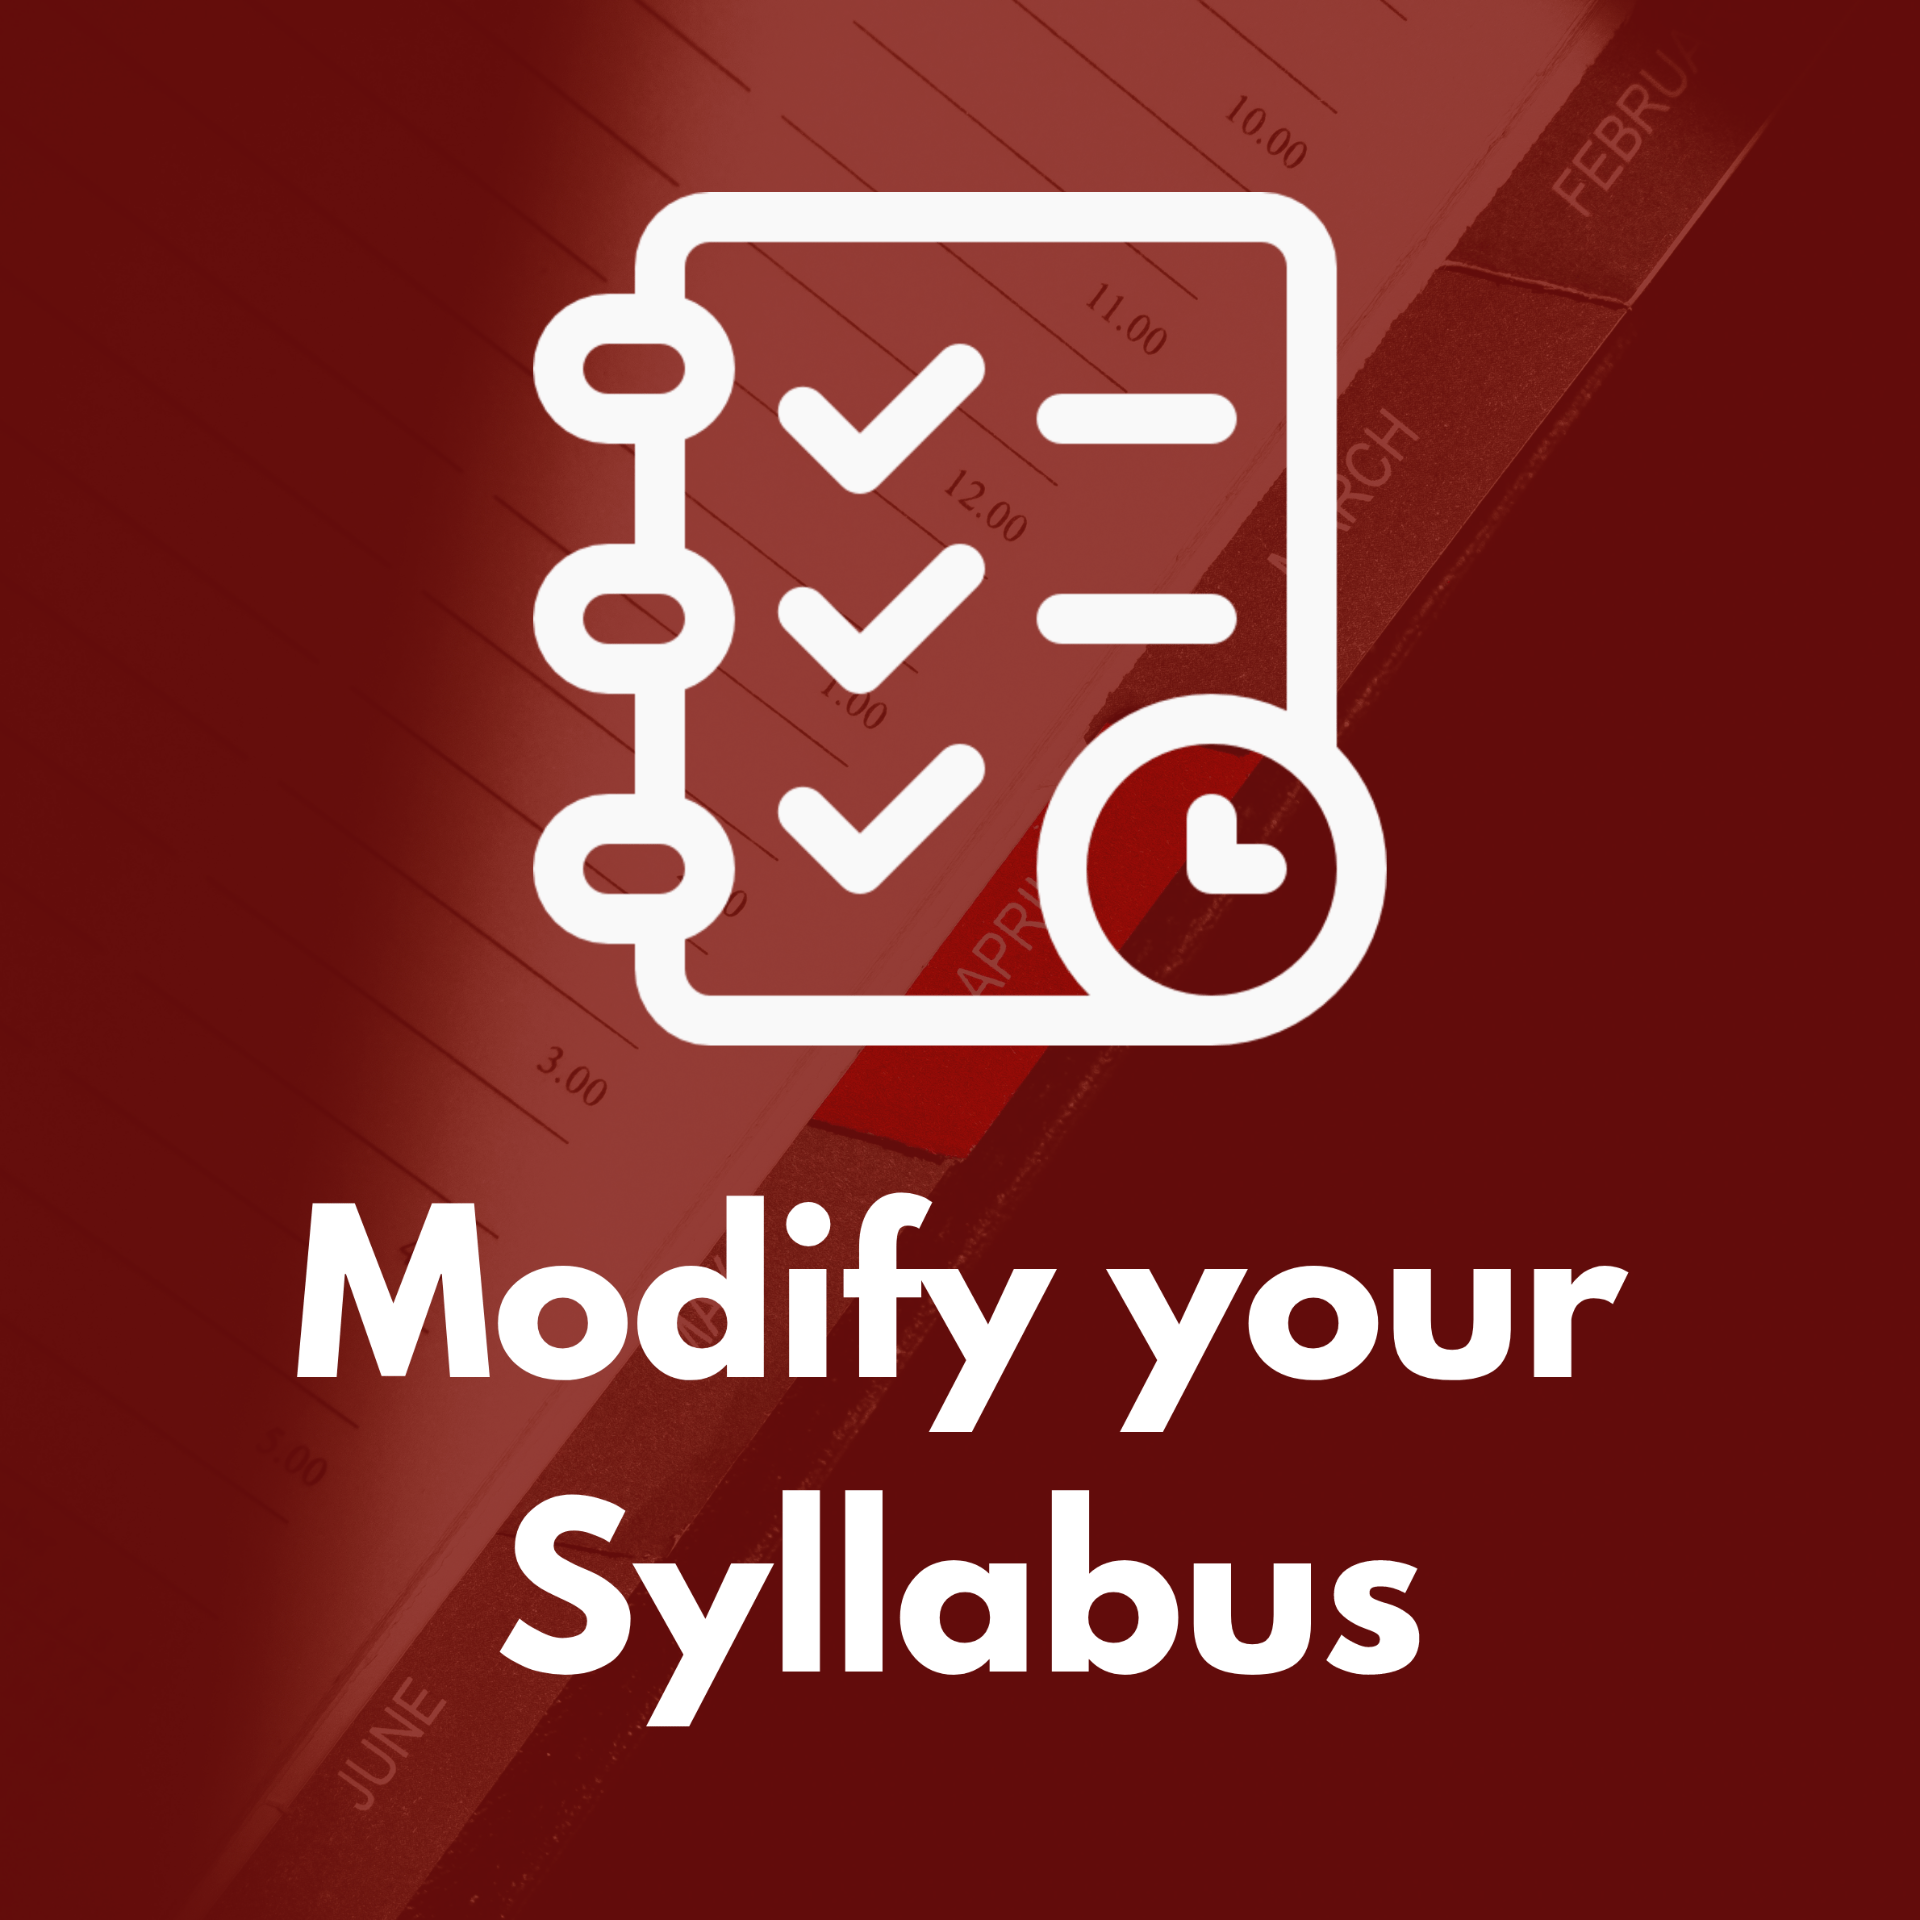 Modify your syllabus